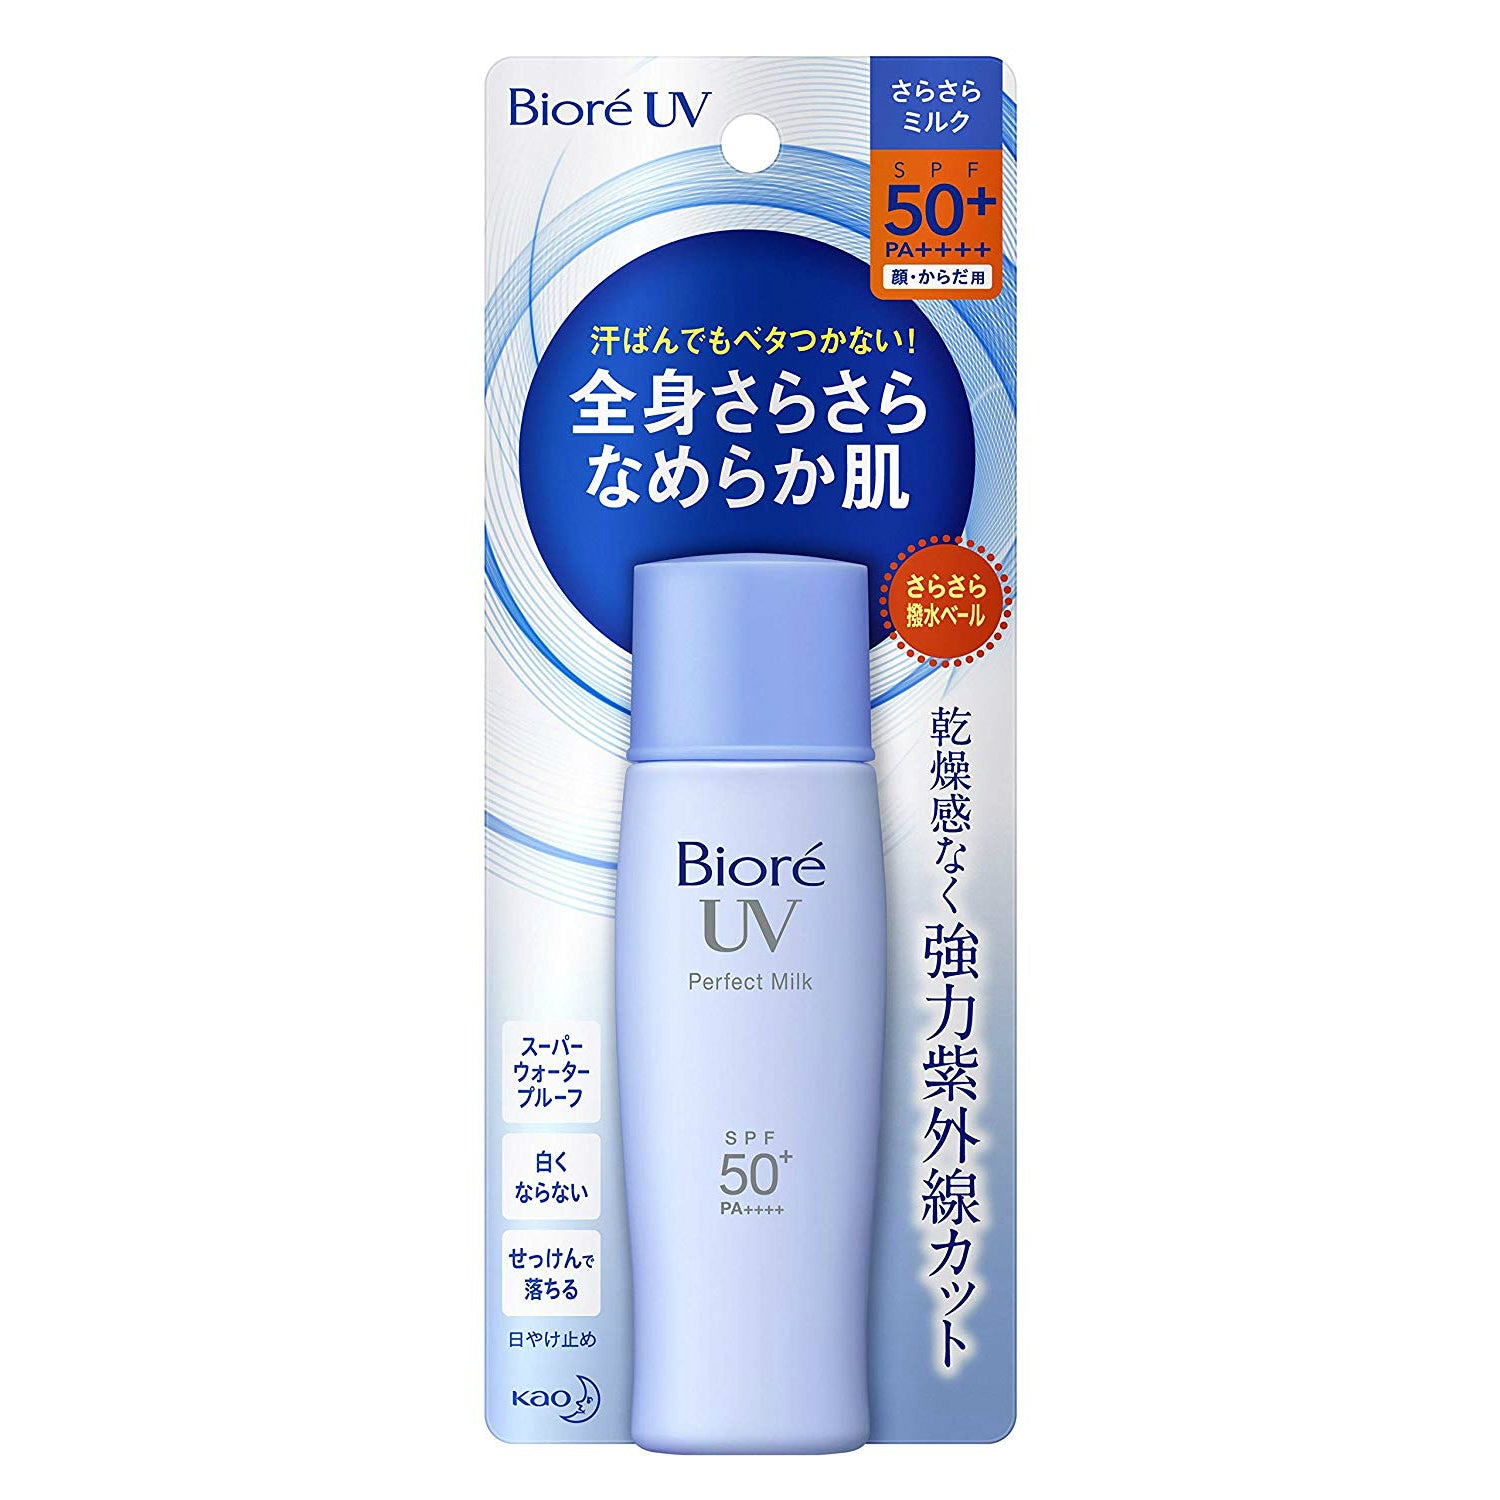 Biore UV Perfect Milk SPF 50PA++++ Beauty Kao   